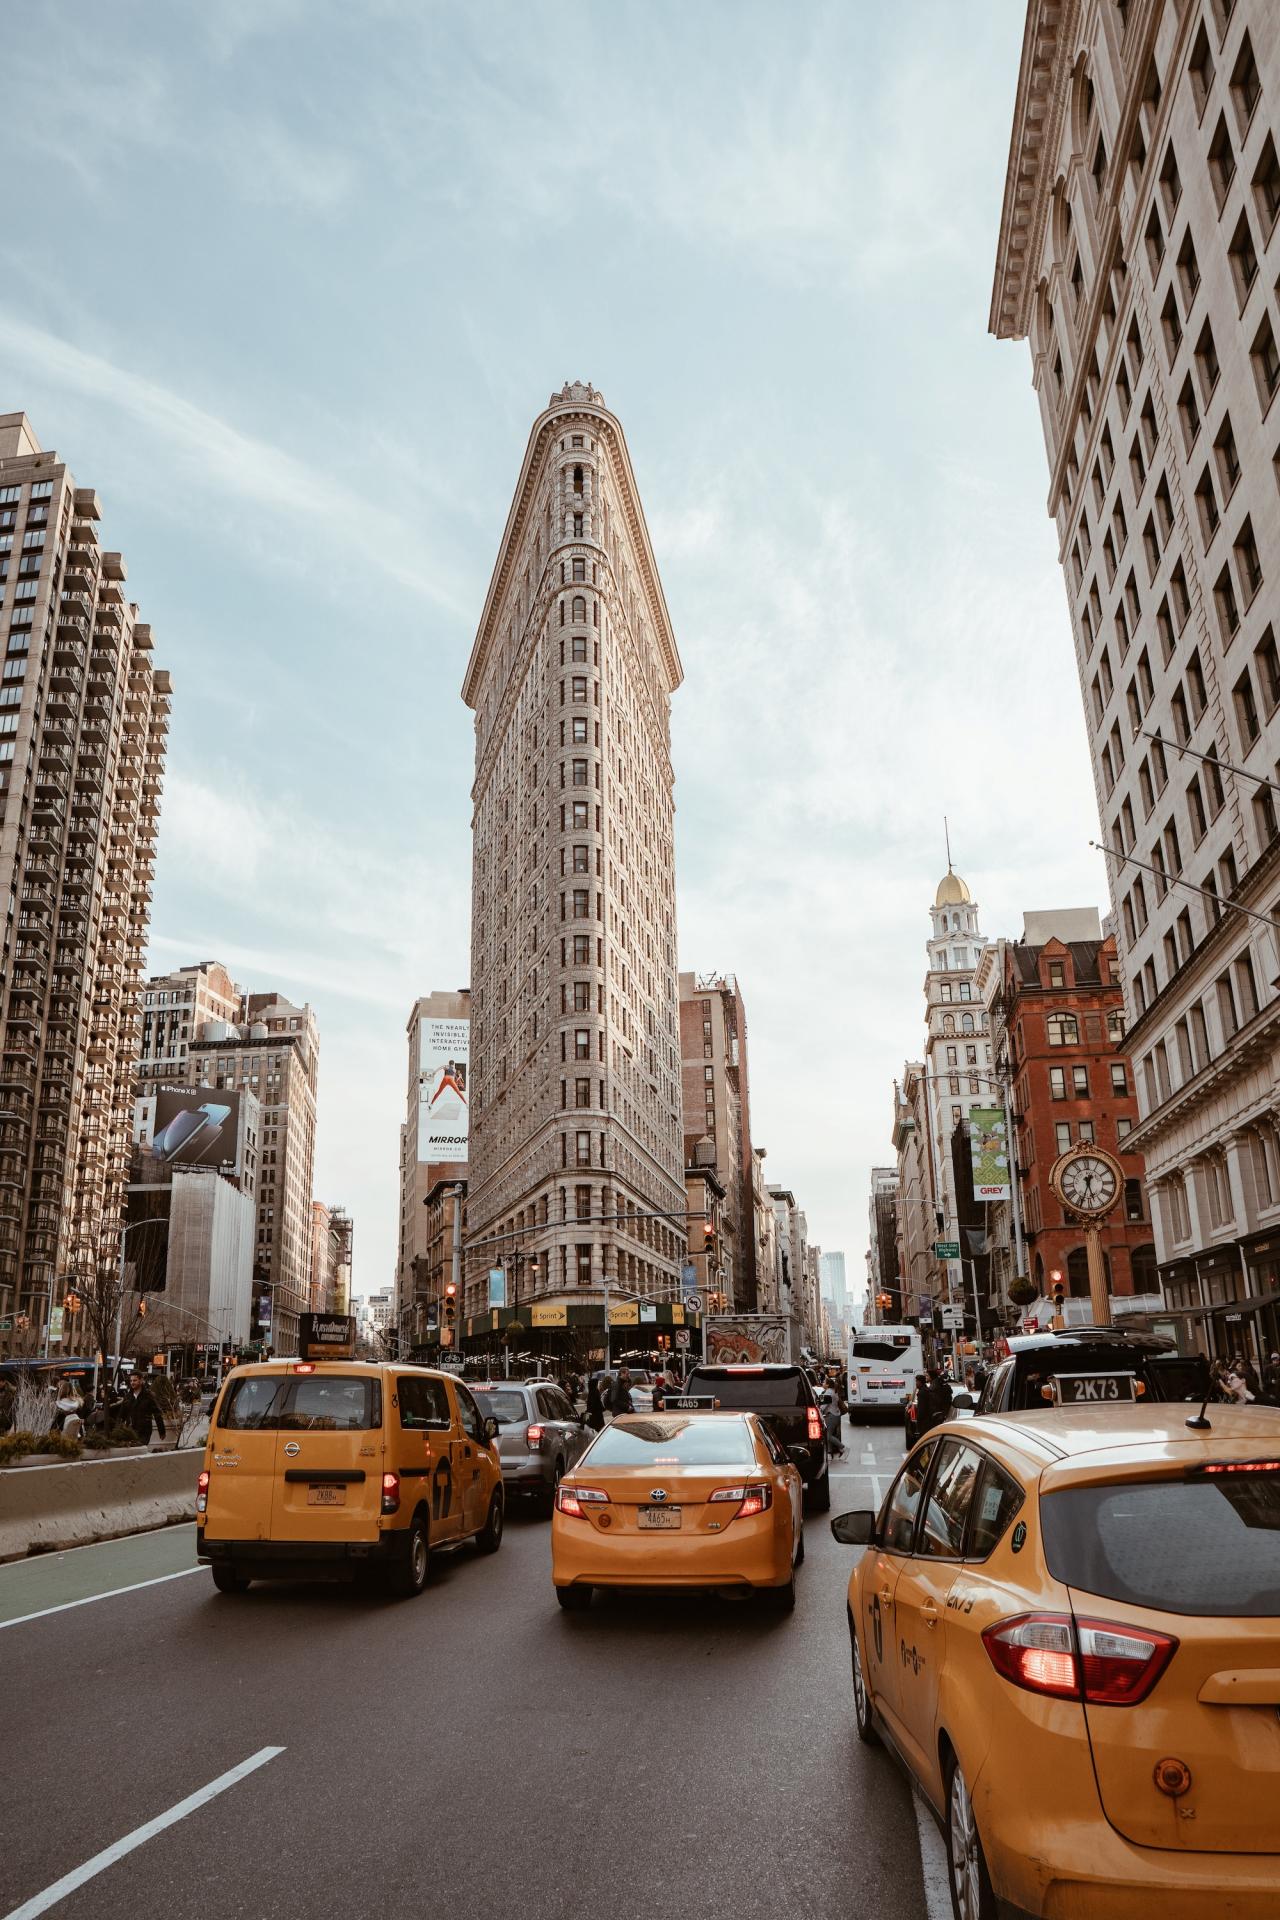 New York's Flatiron Building to be Converted into Luxury Condos